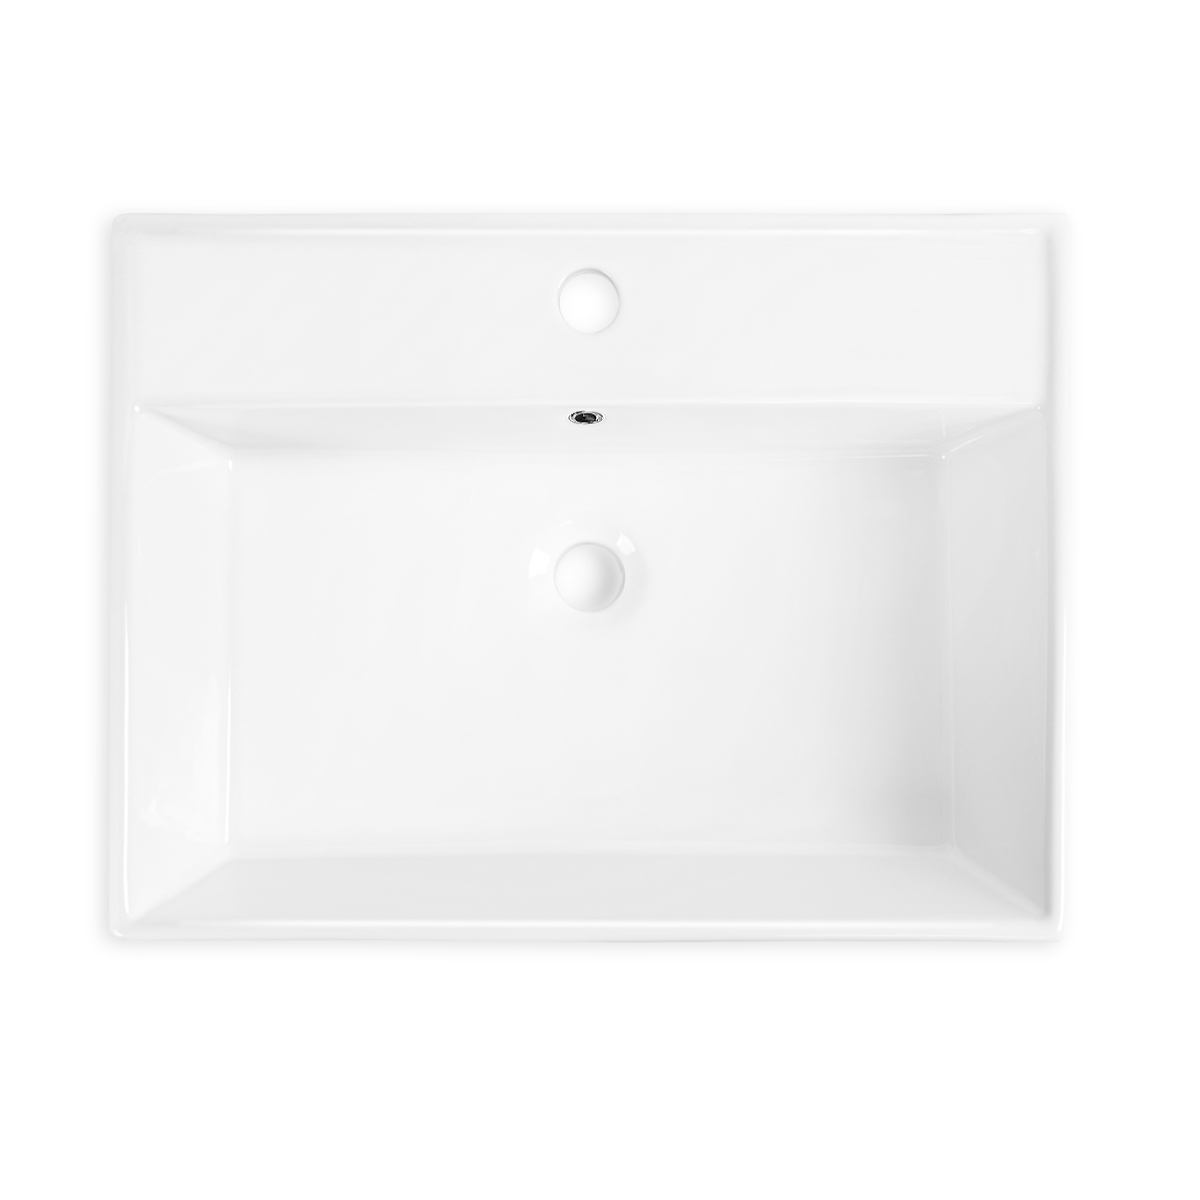 BVS2417A-OL 24" x 17" White Rectangular Ceramic Countertop Bathroom Vanity Vessel Sink